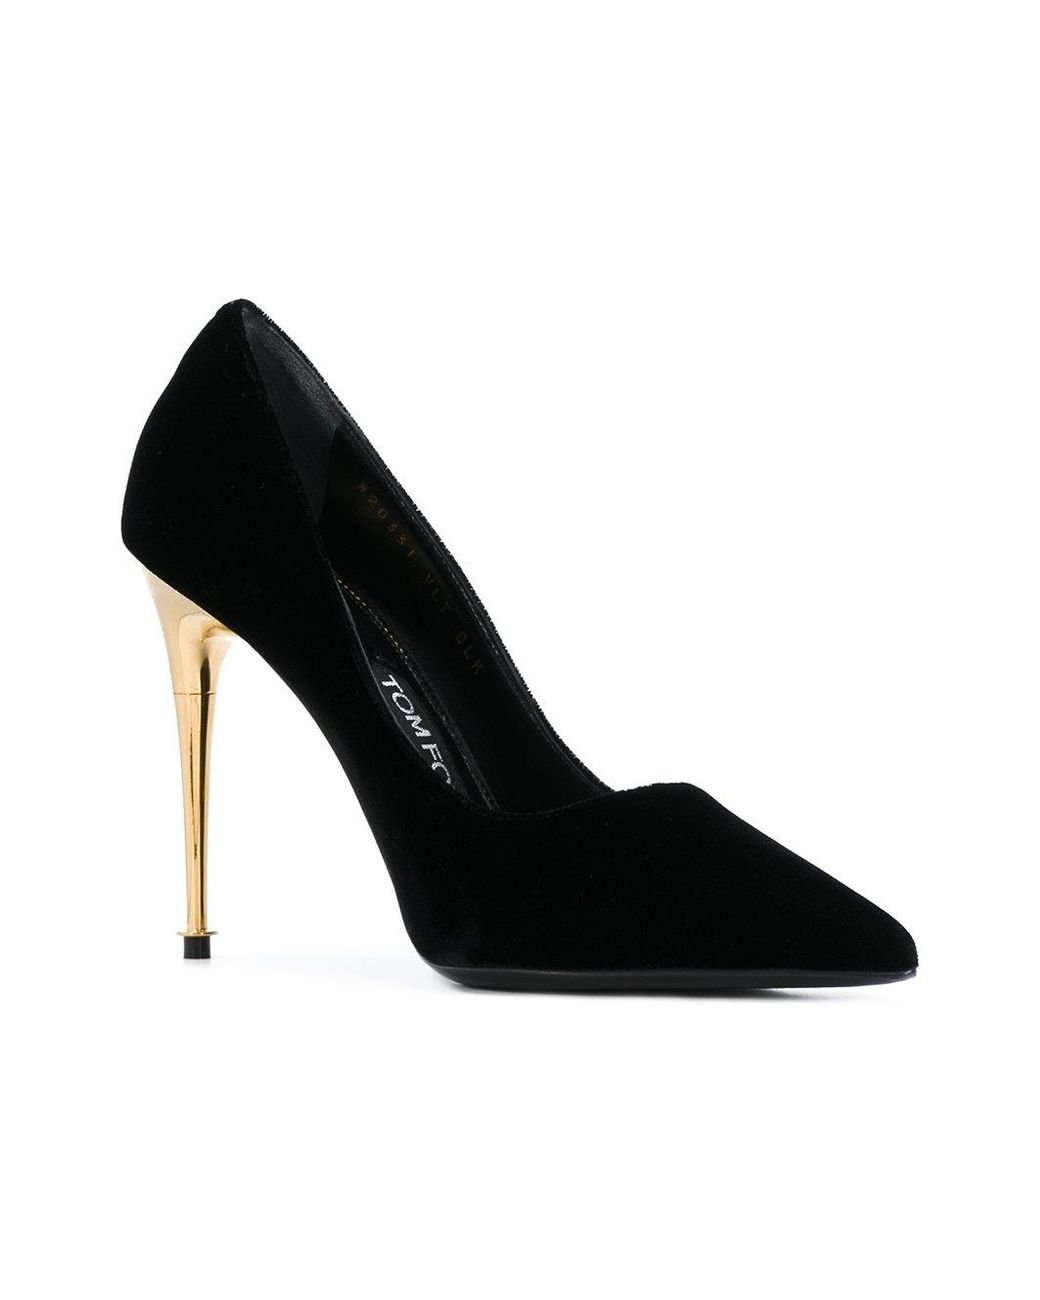 Yves Saint Laurent Black and Gold Heels | creamnewburghnew